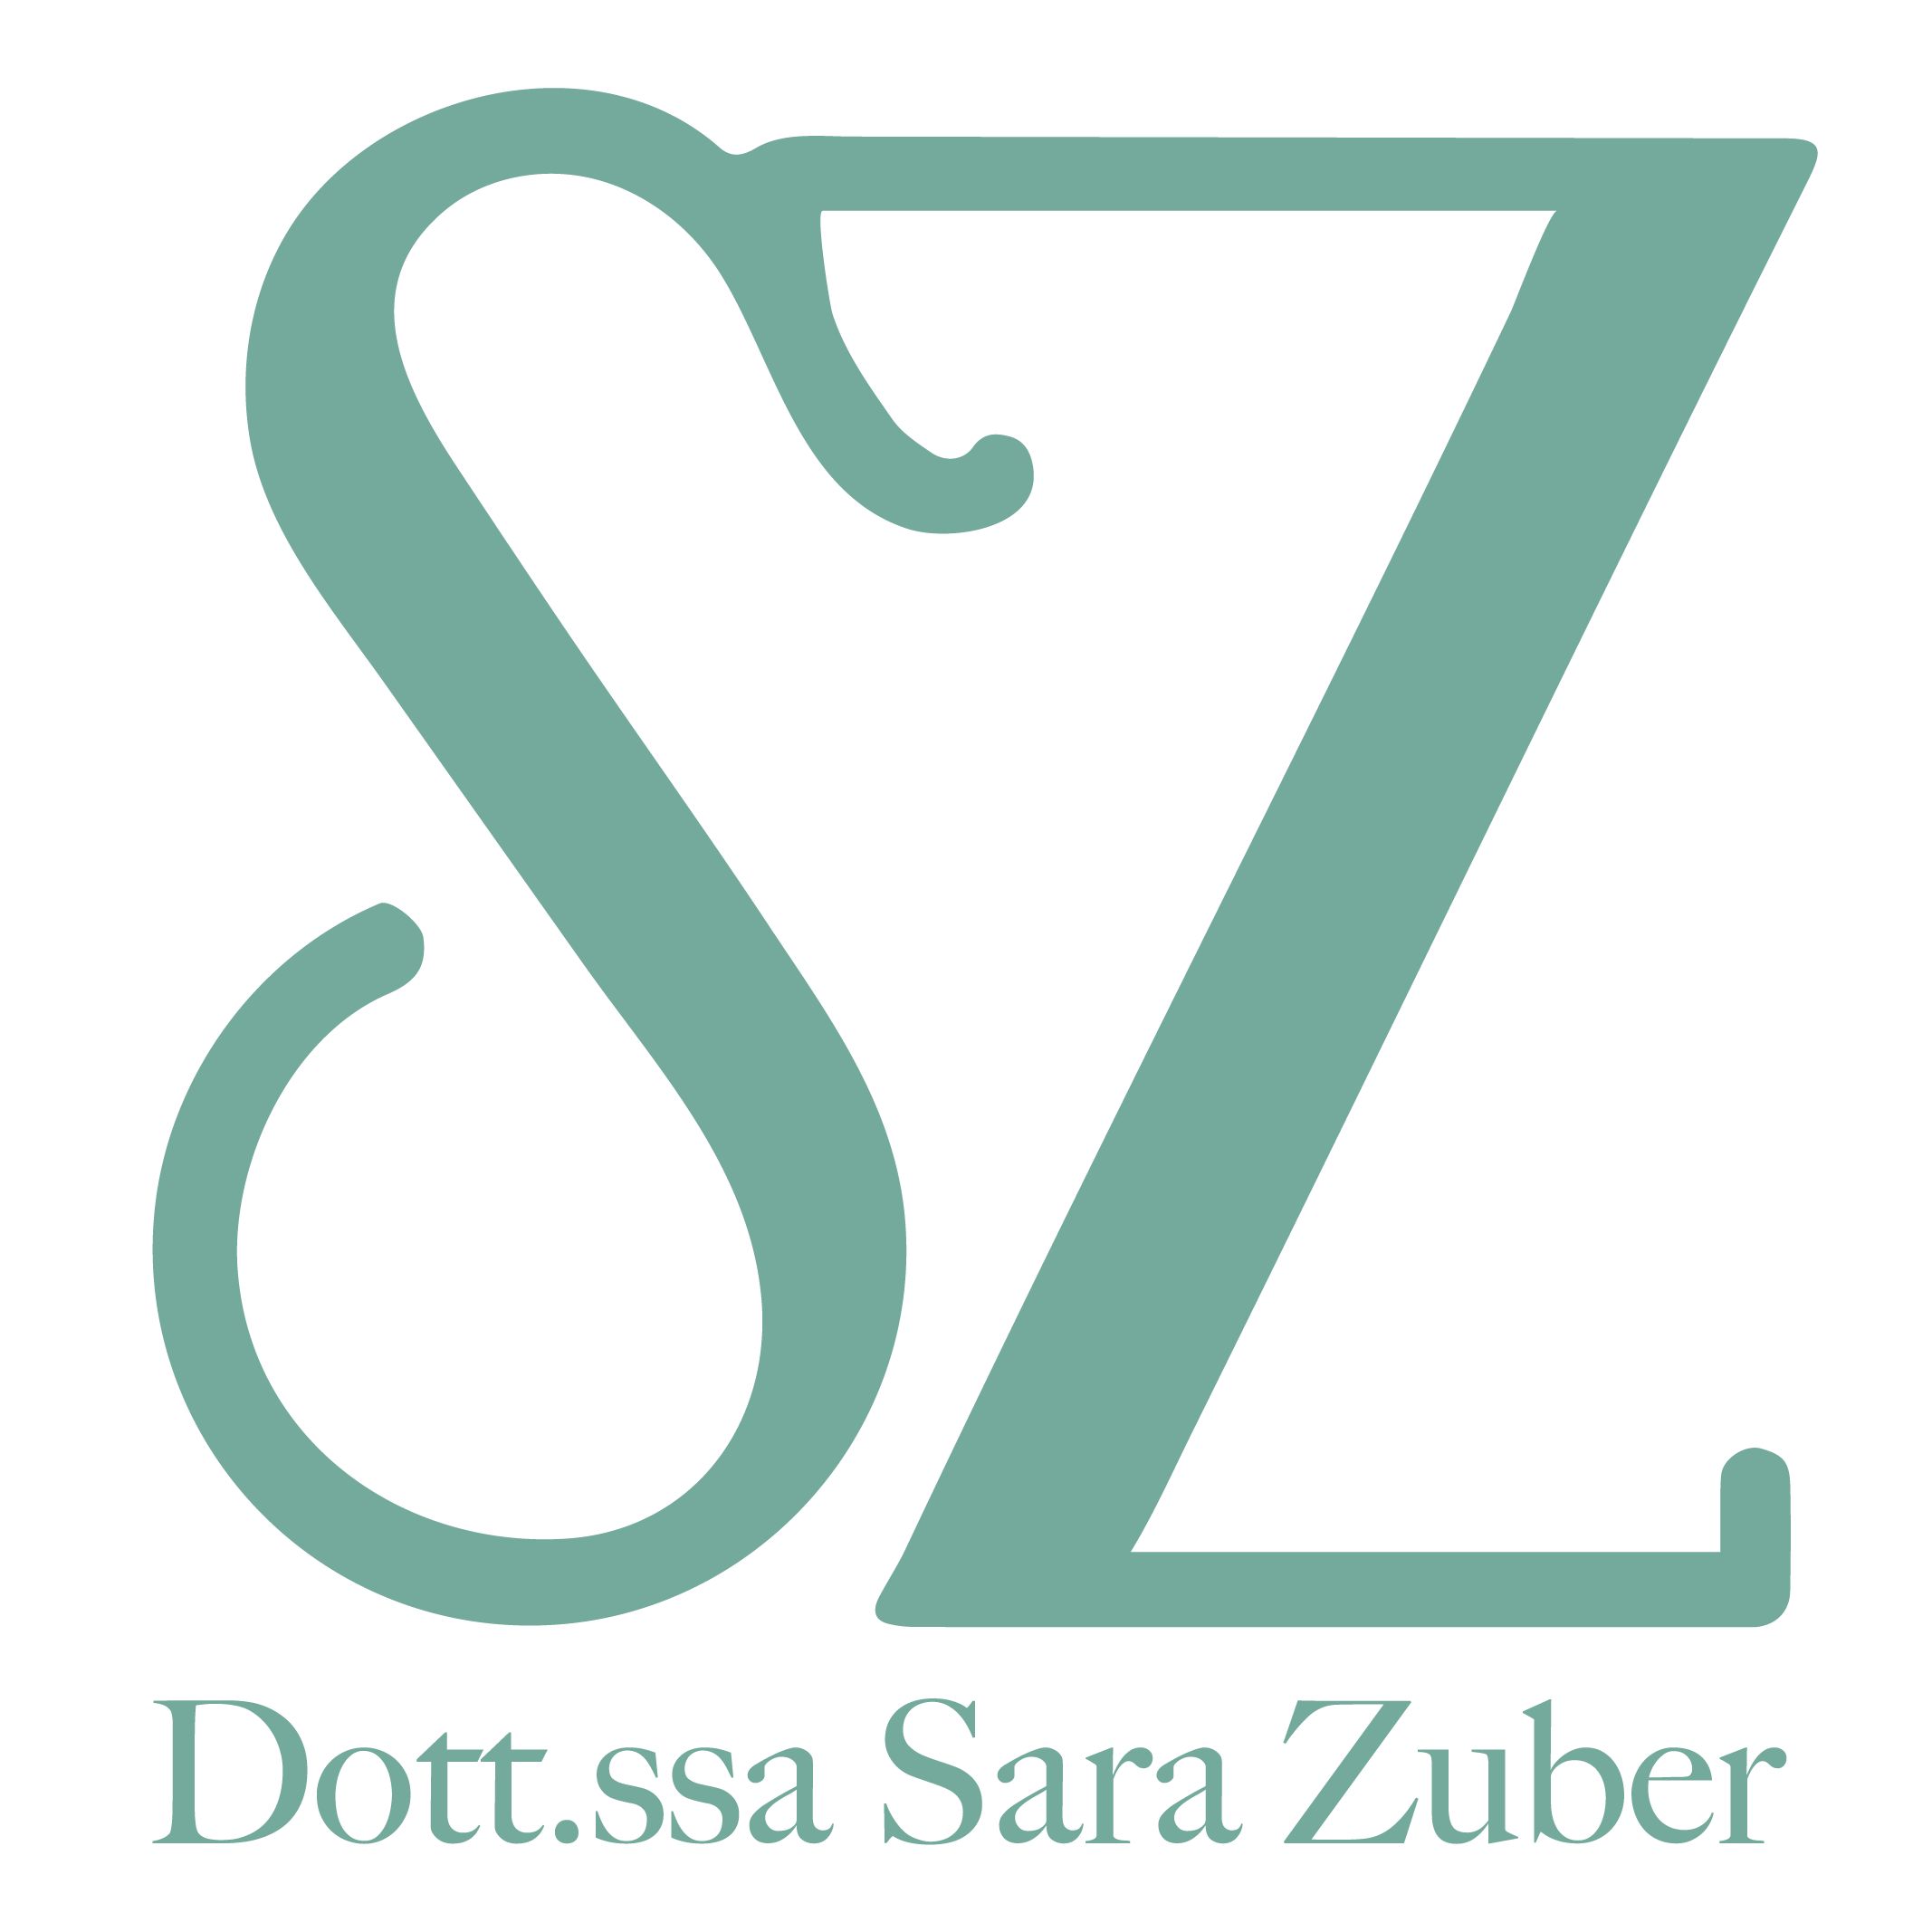 Dottoressa Sara Zuber | Dermatologia & Medicina Estetica – Formia